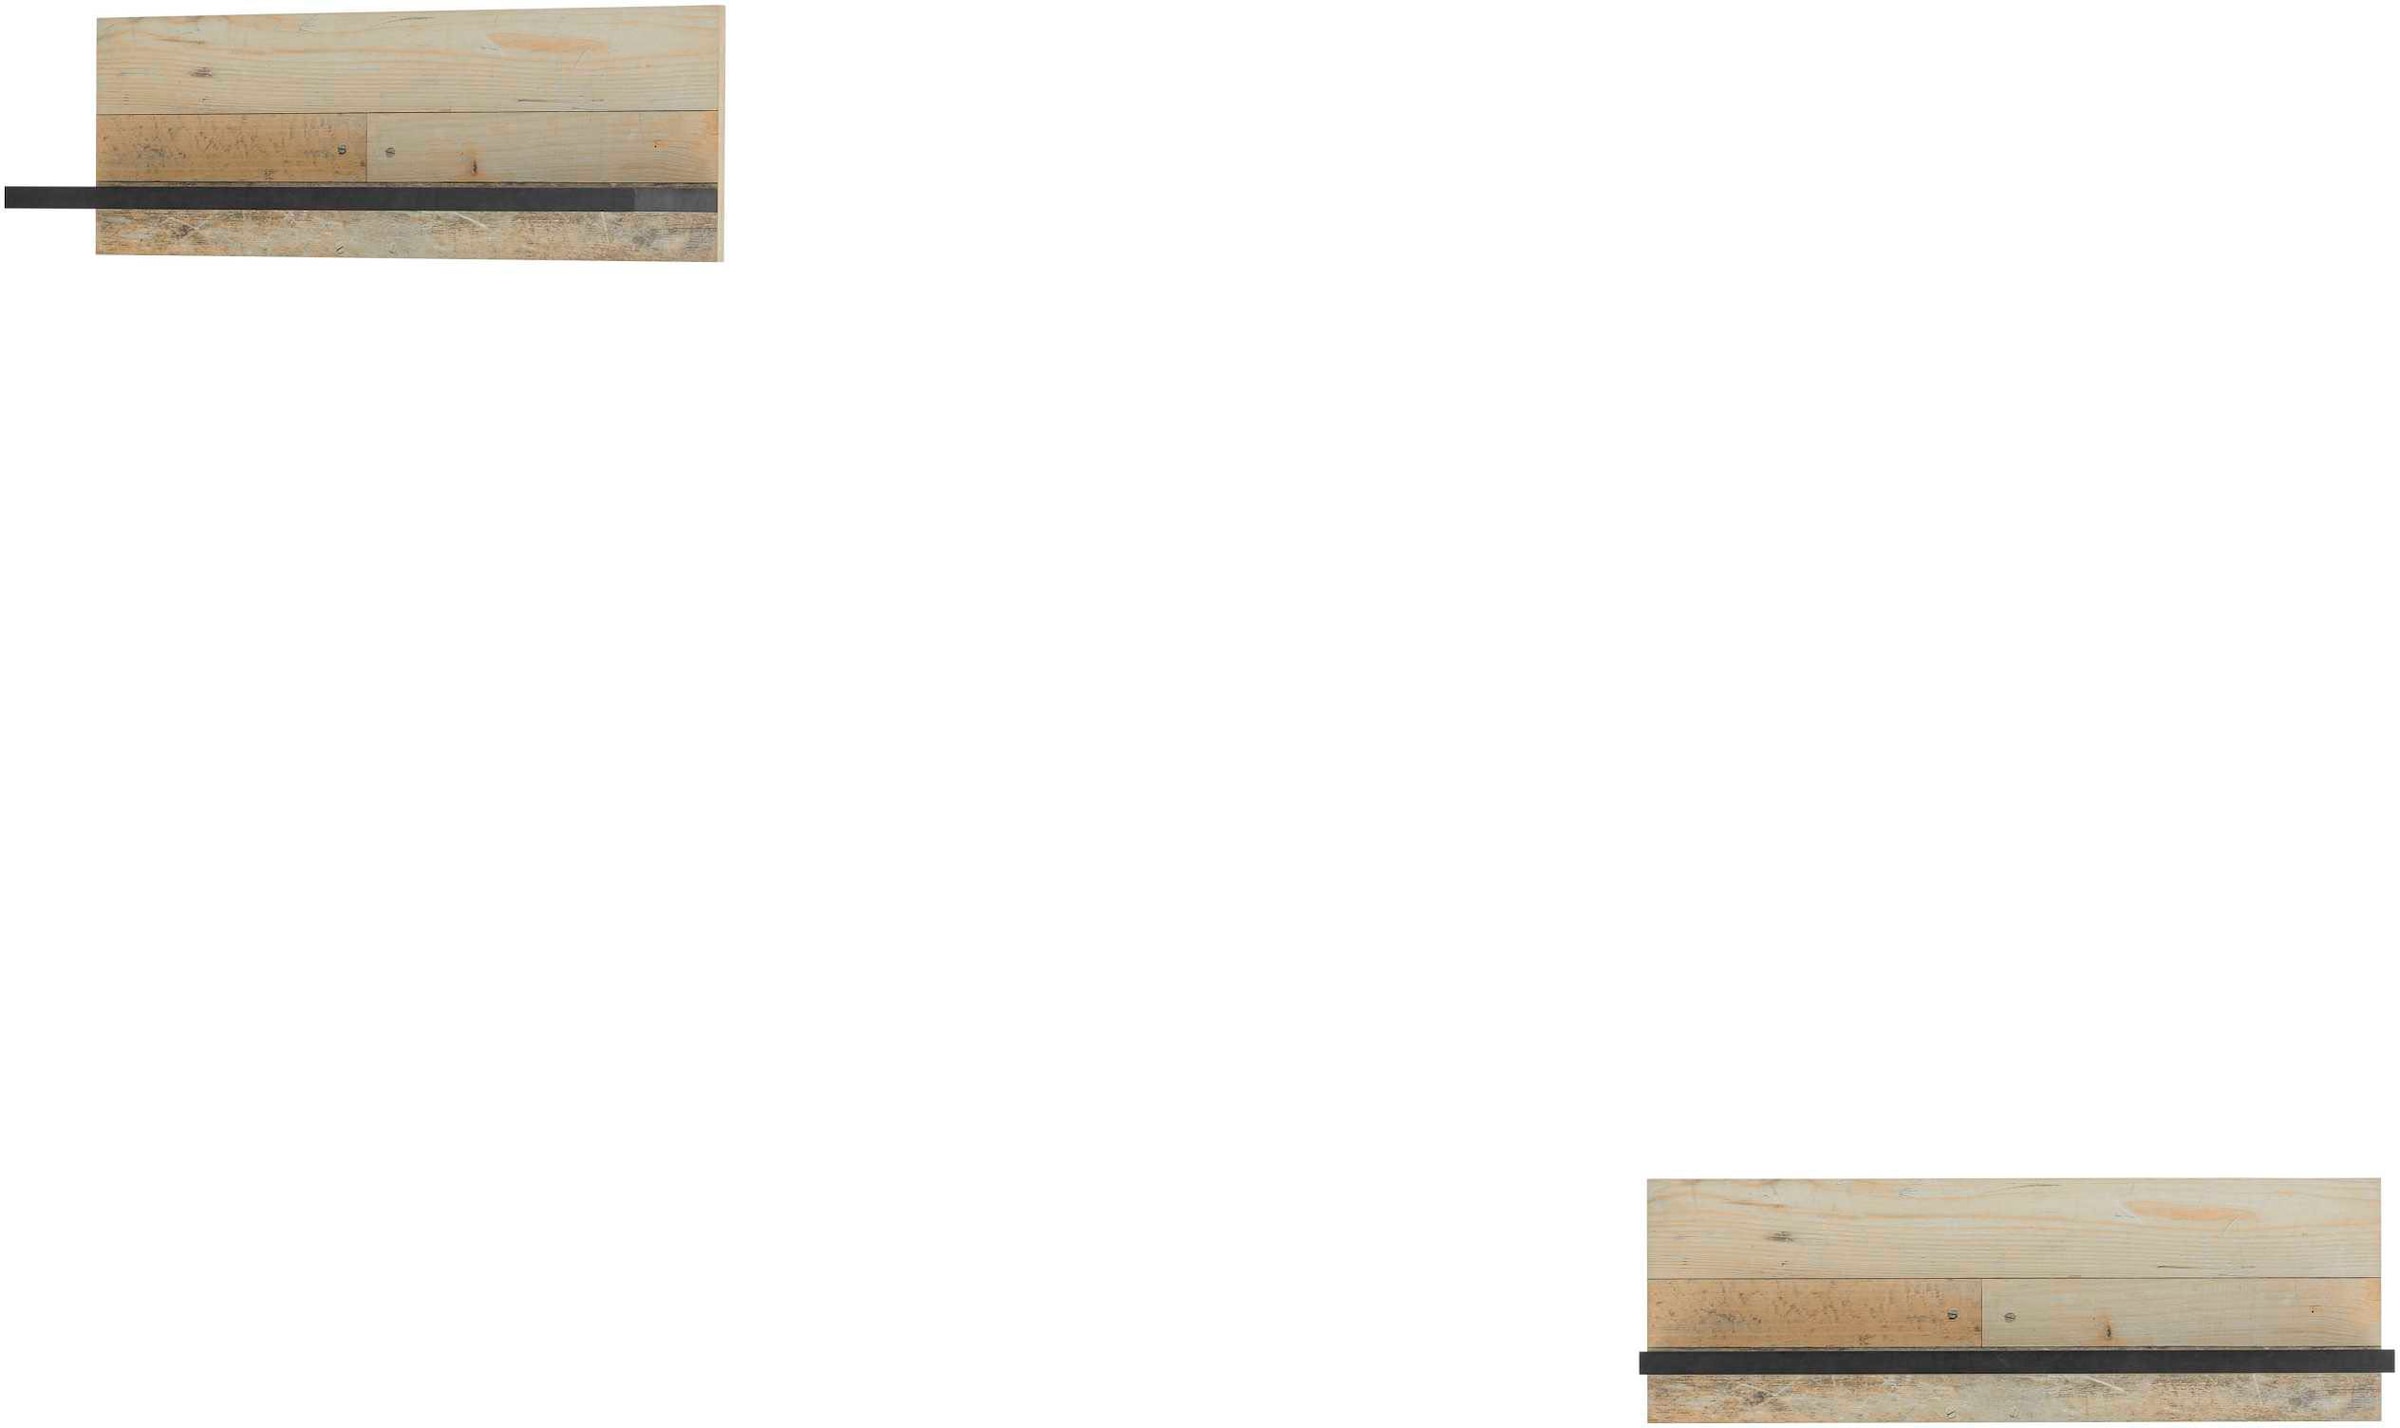 Home affaire Wandregal "Sherwood", Breite 90 cm, in modernem Holz Dekor, 28 mm starke Ablageböden